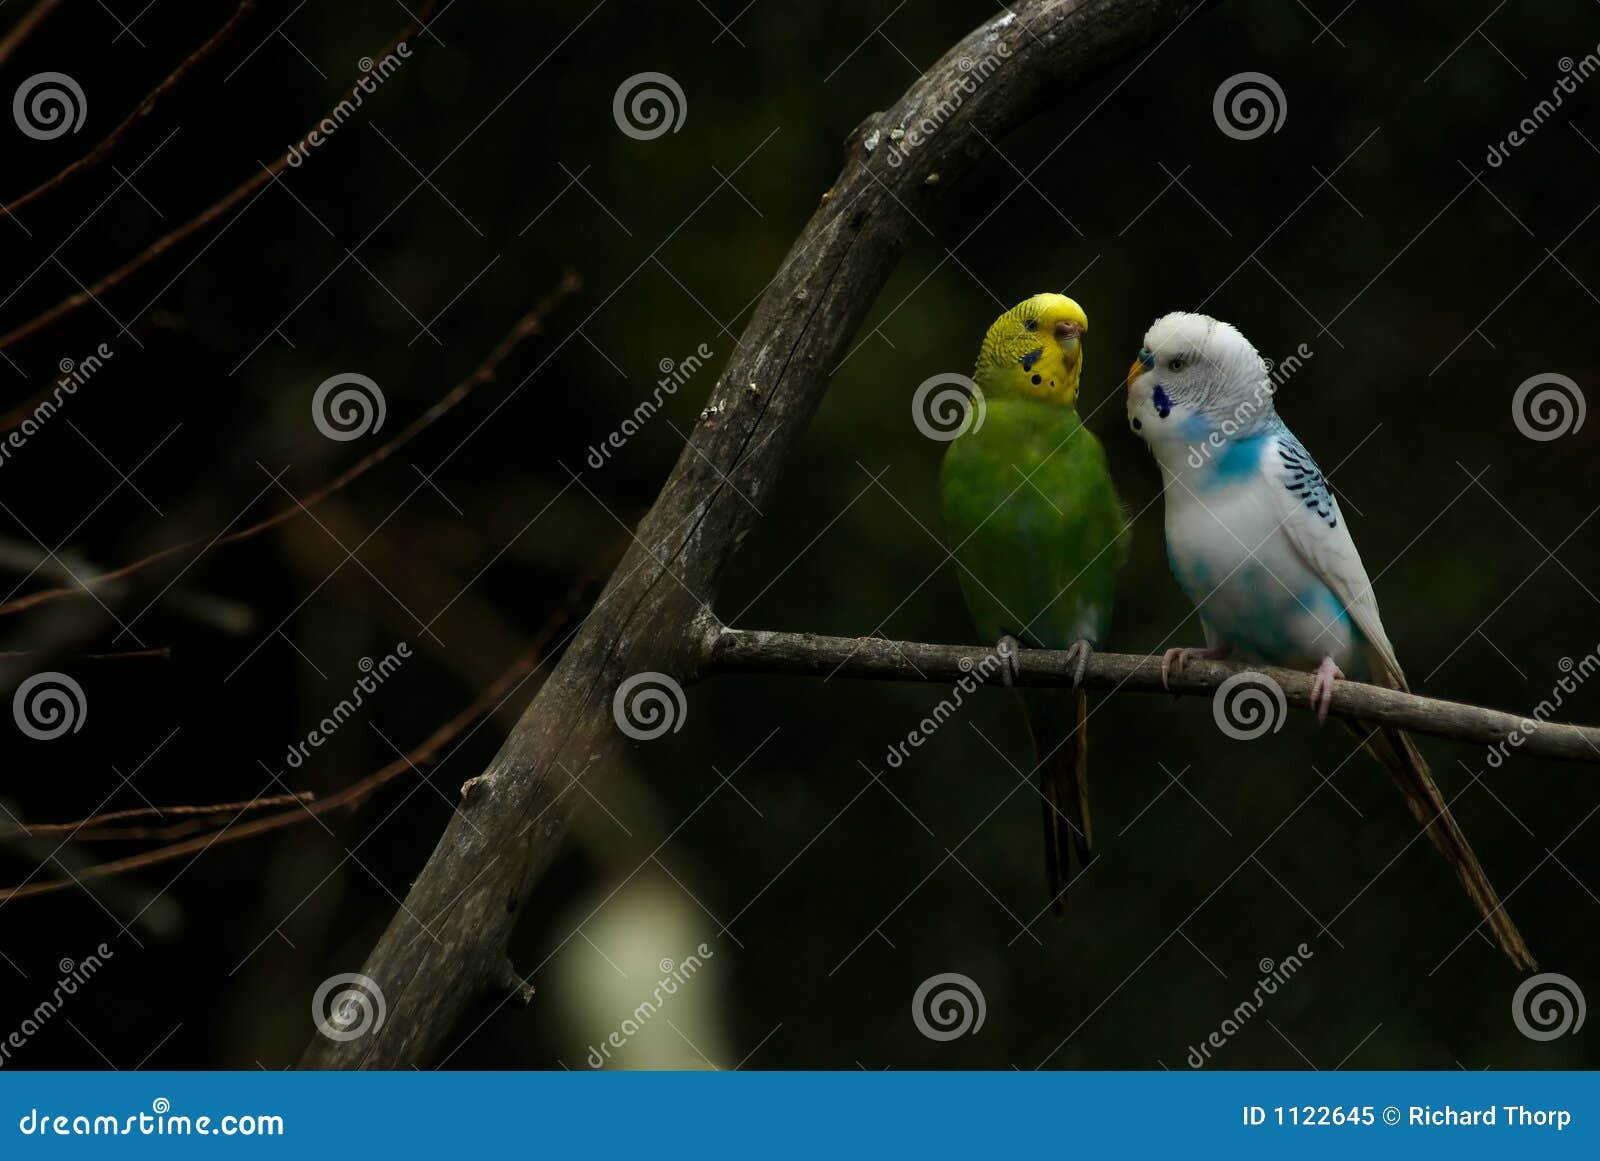 parakeet birds in conversation